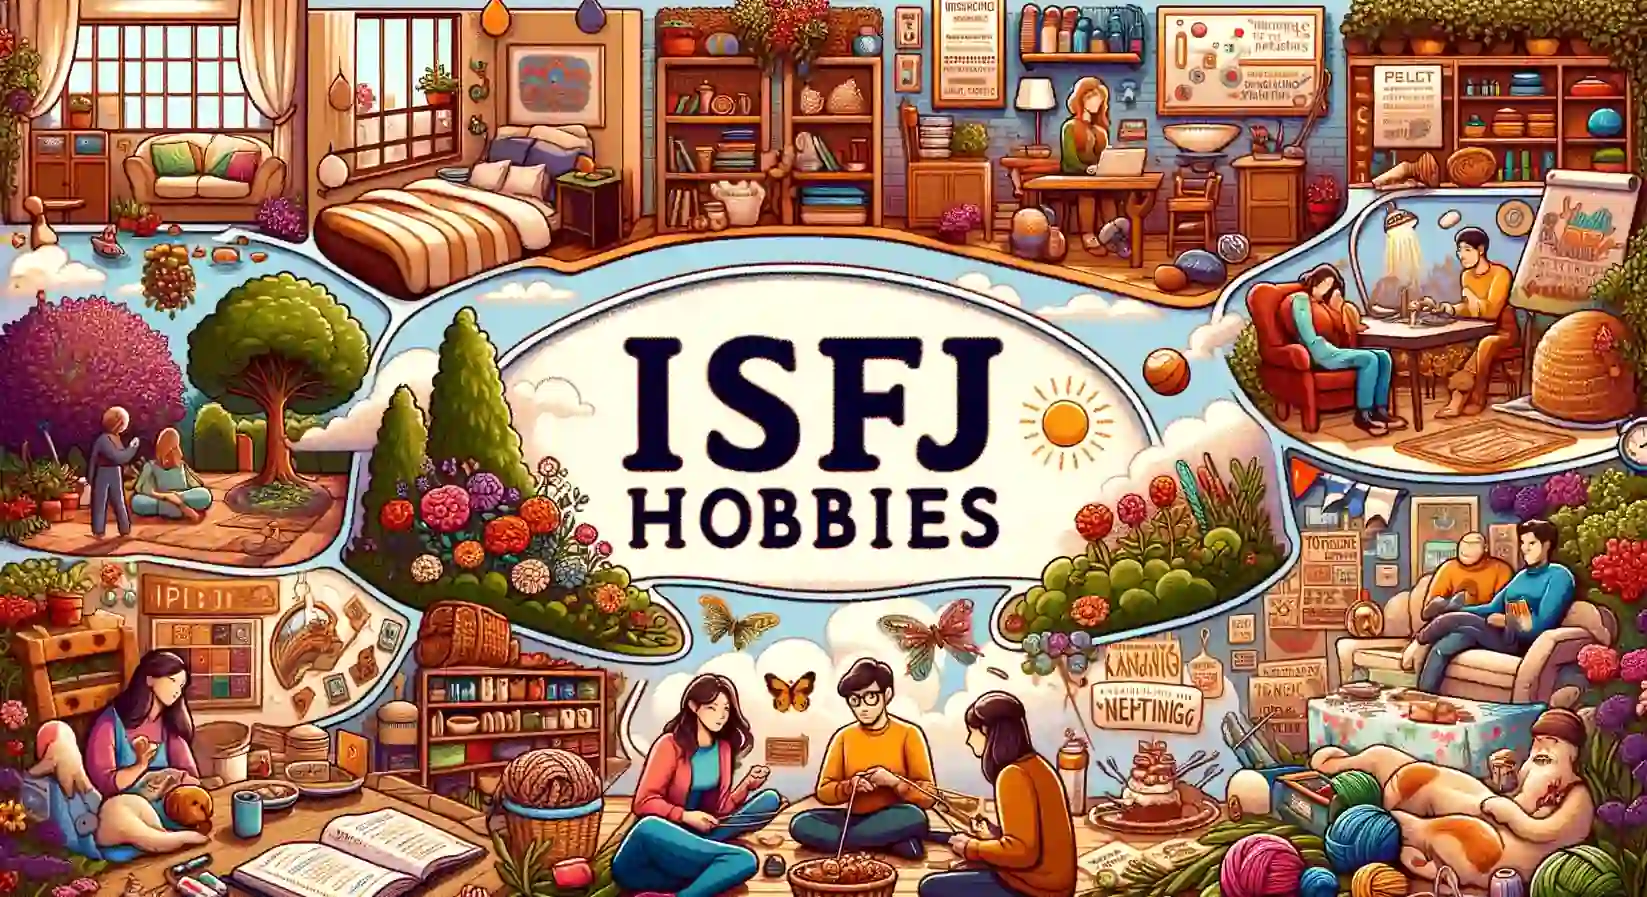 ISFJ Hobbies